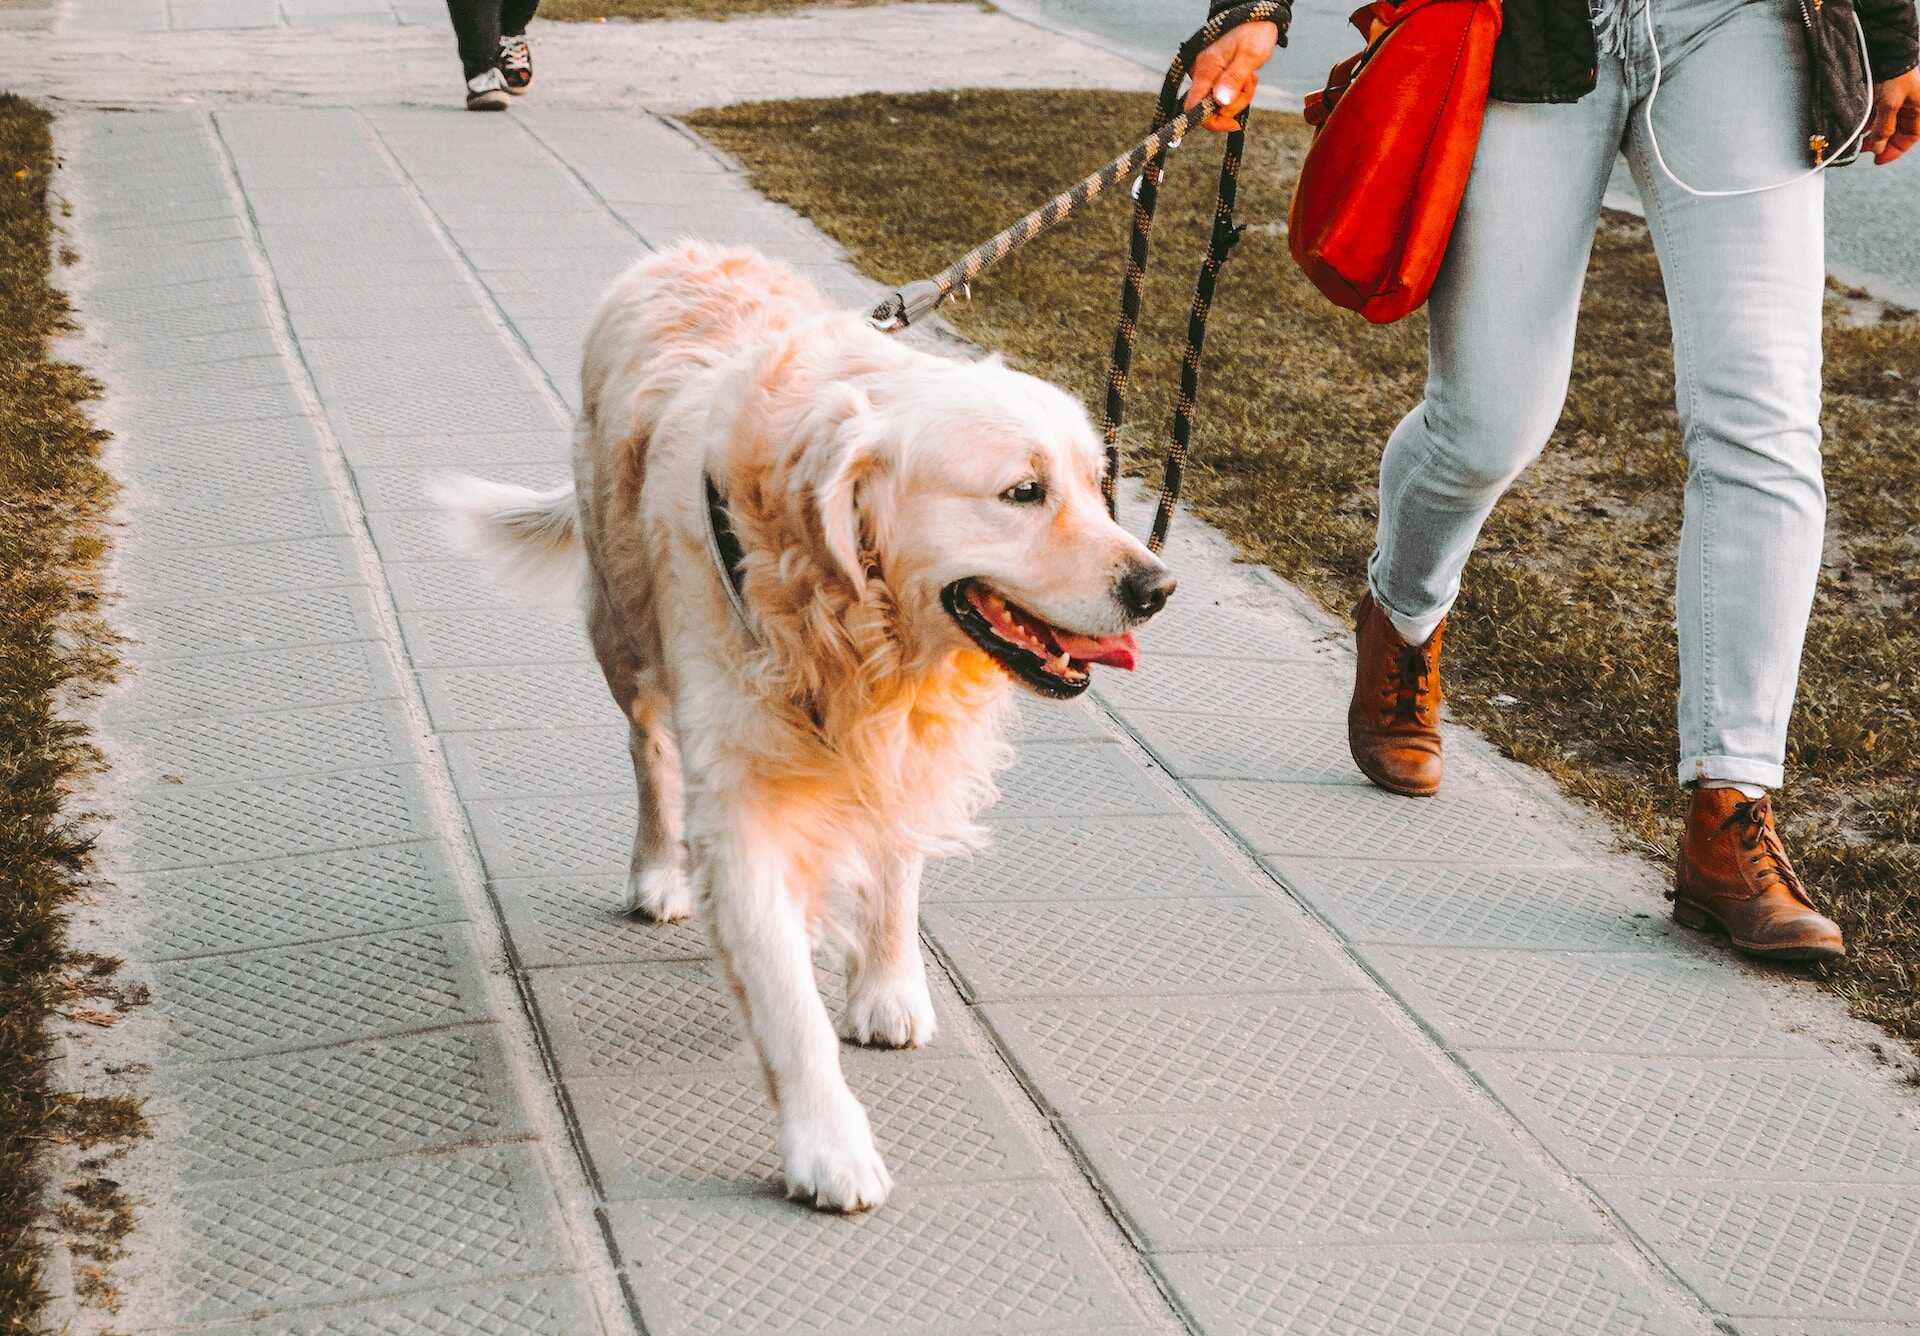 A Golden Retriever walking on leash in a city